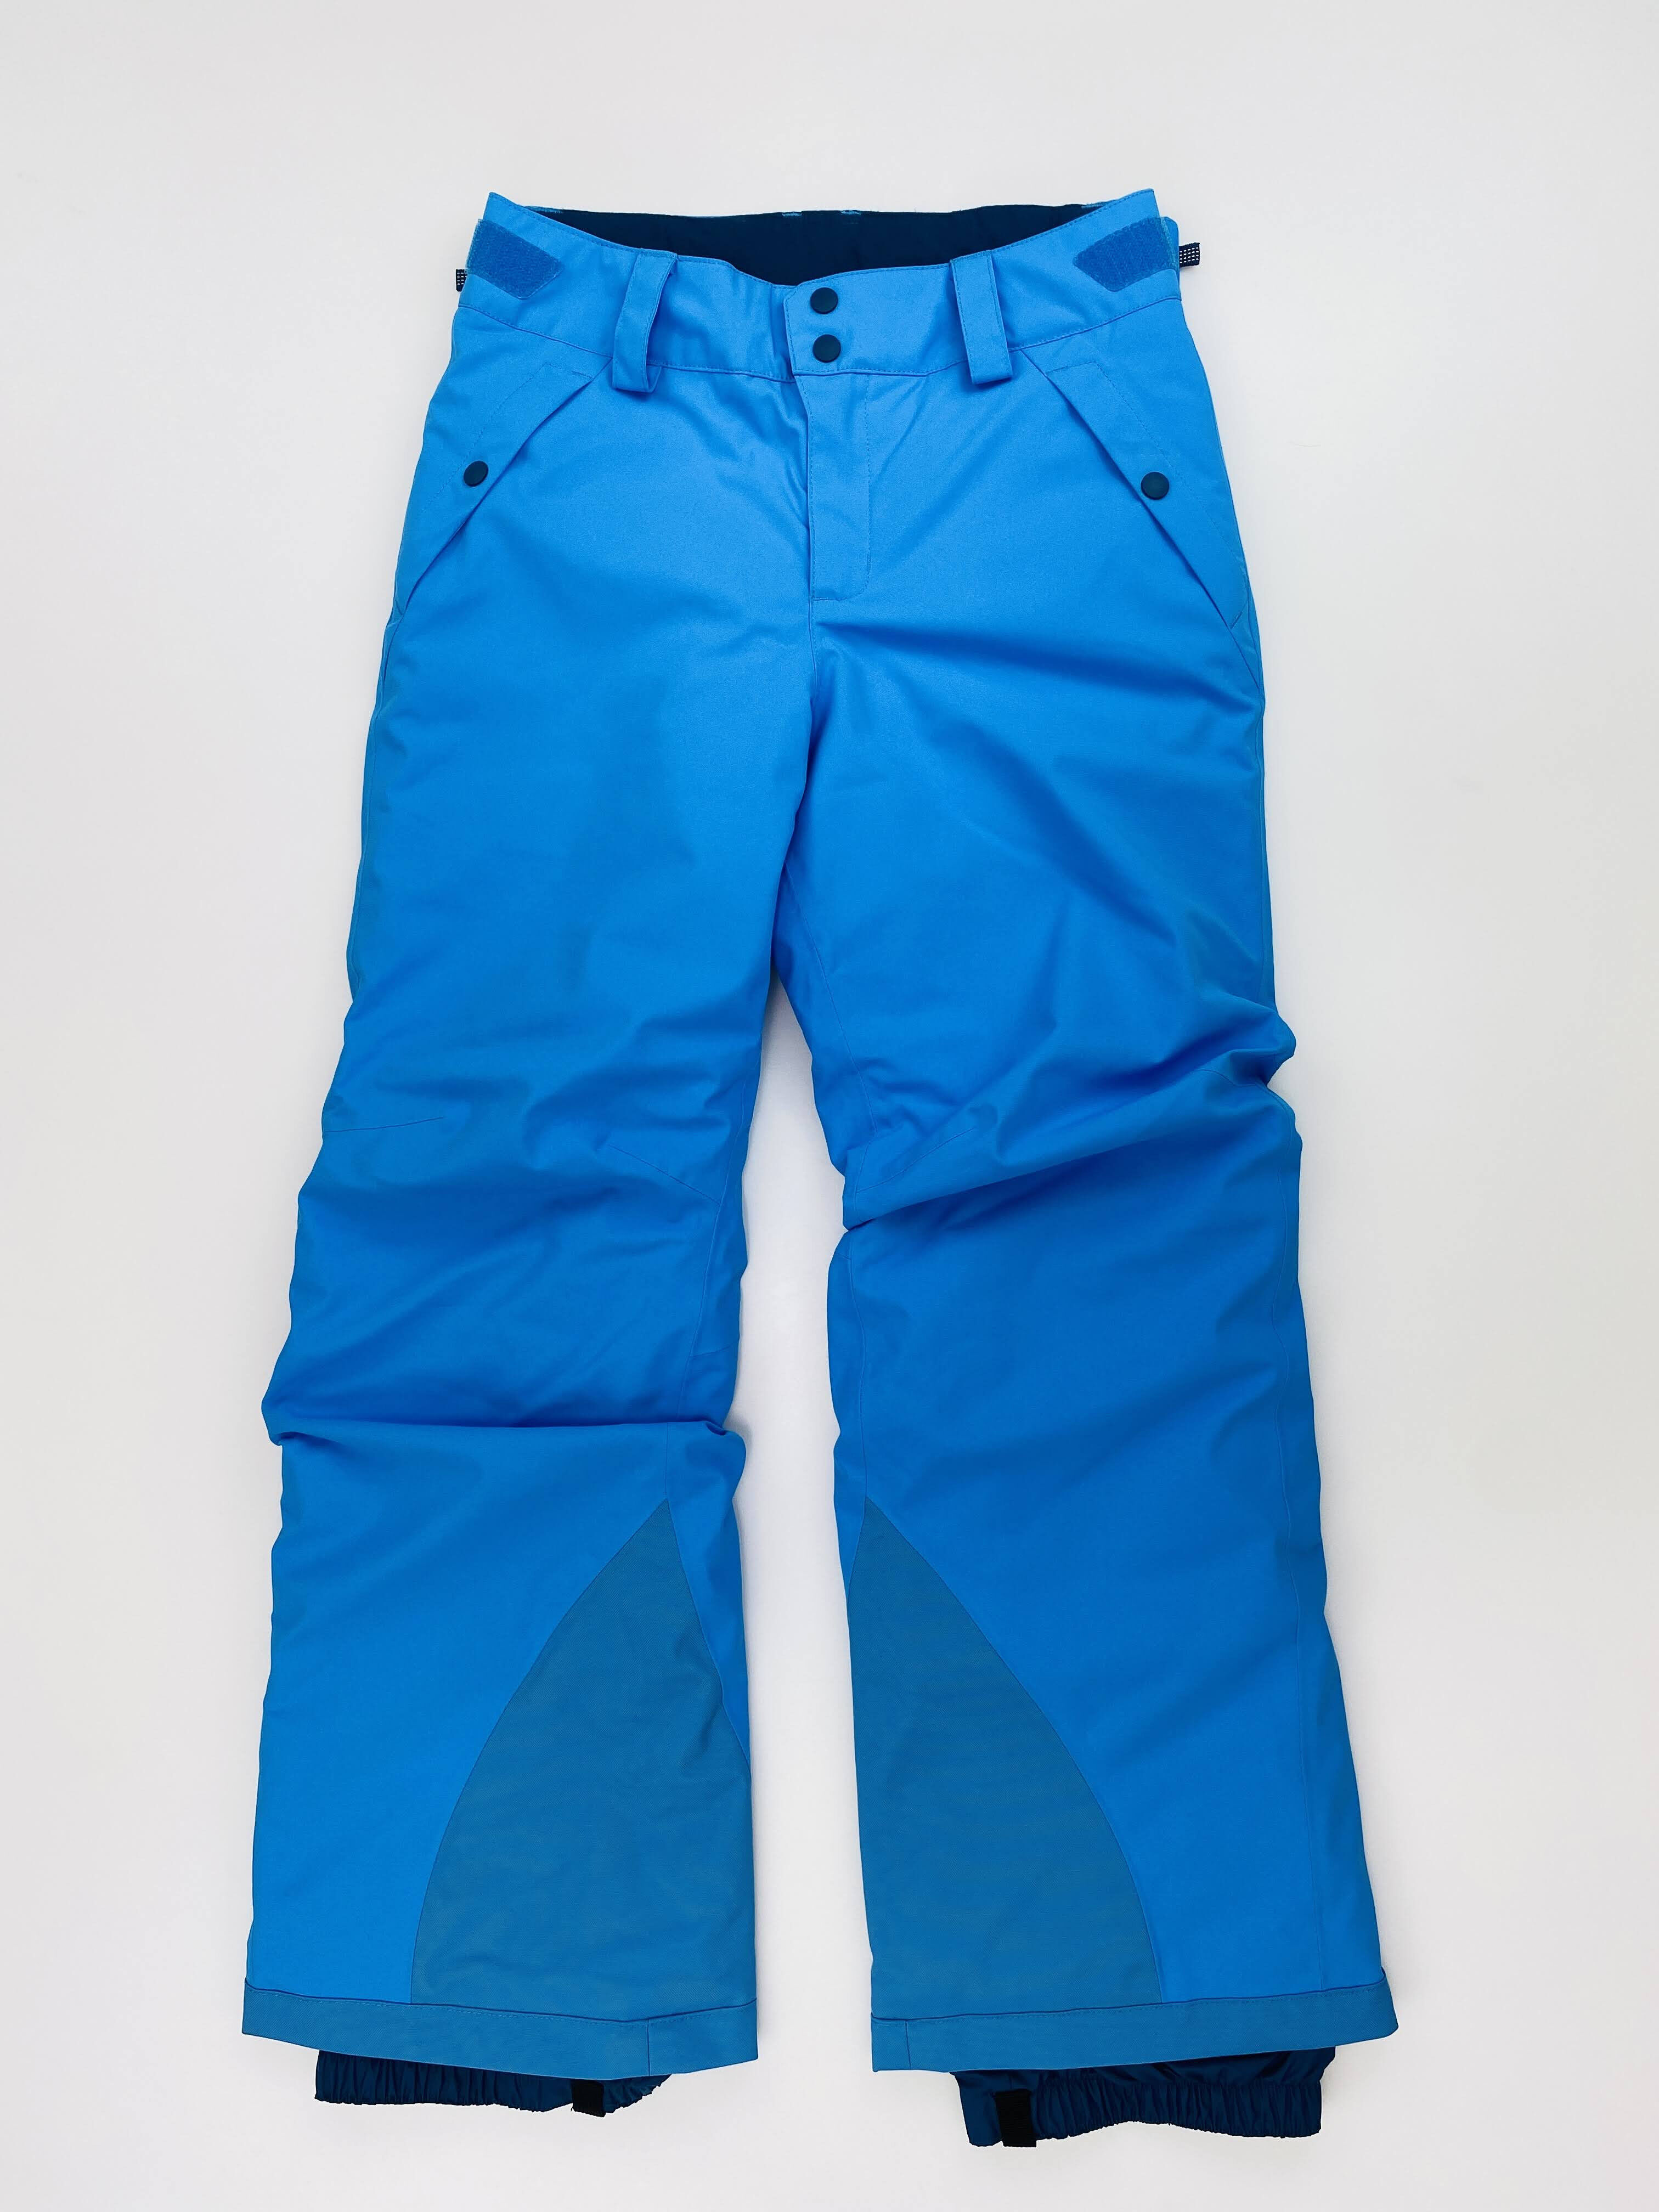 Patagonia Girls' Everyday Ready Pants - Seconde main Pantalon ski enfant - Bleu - M | Hardloop